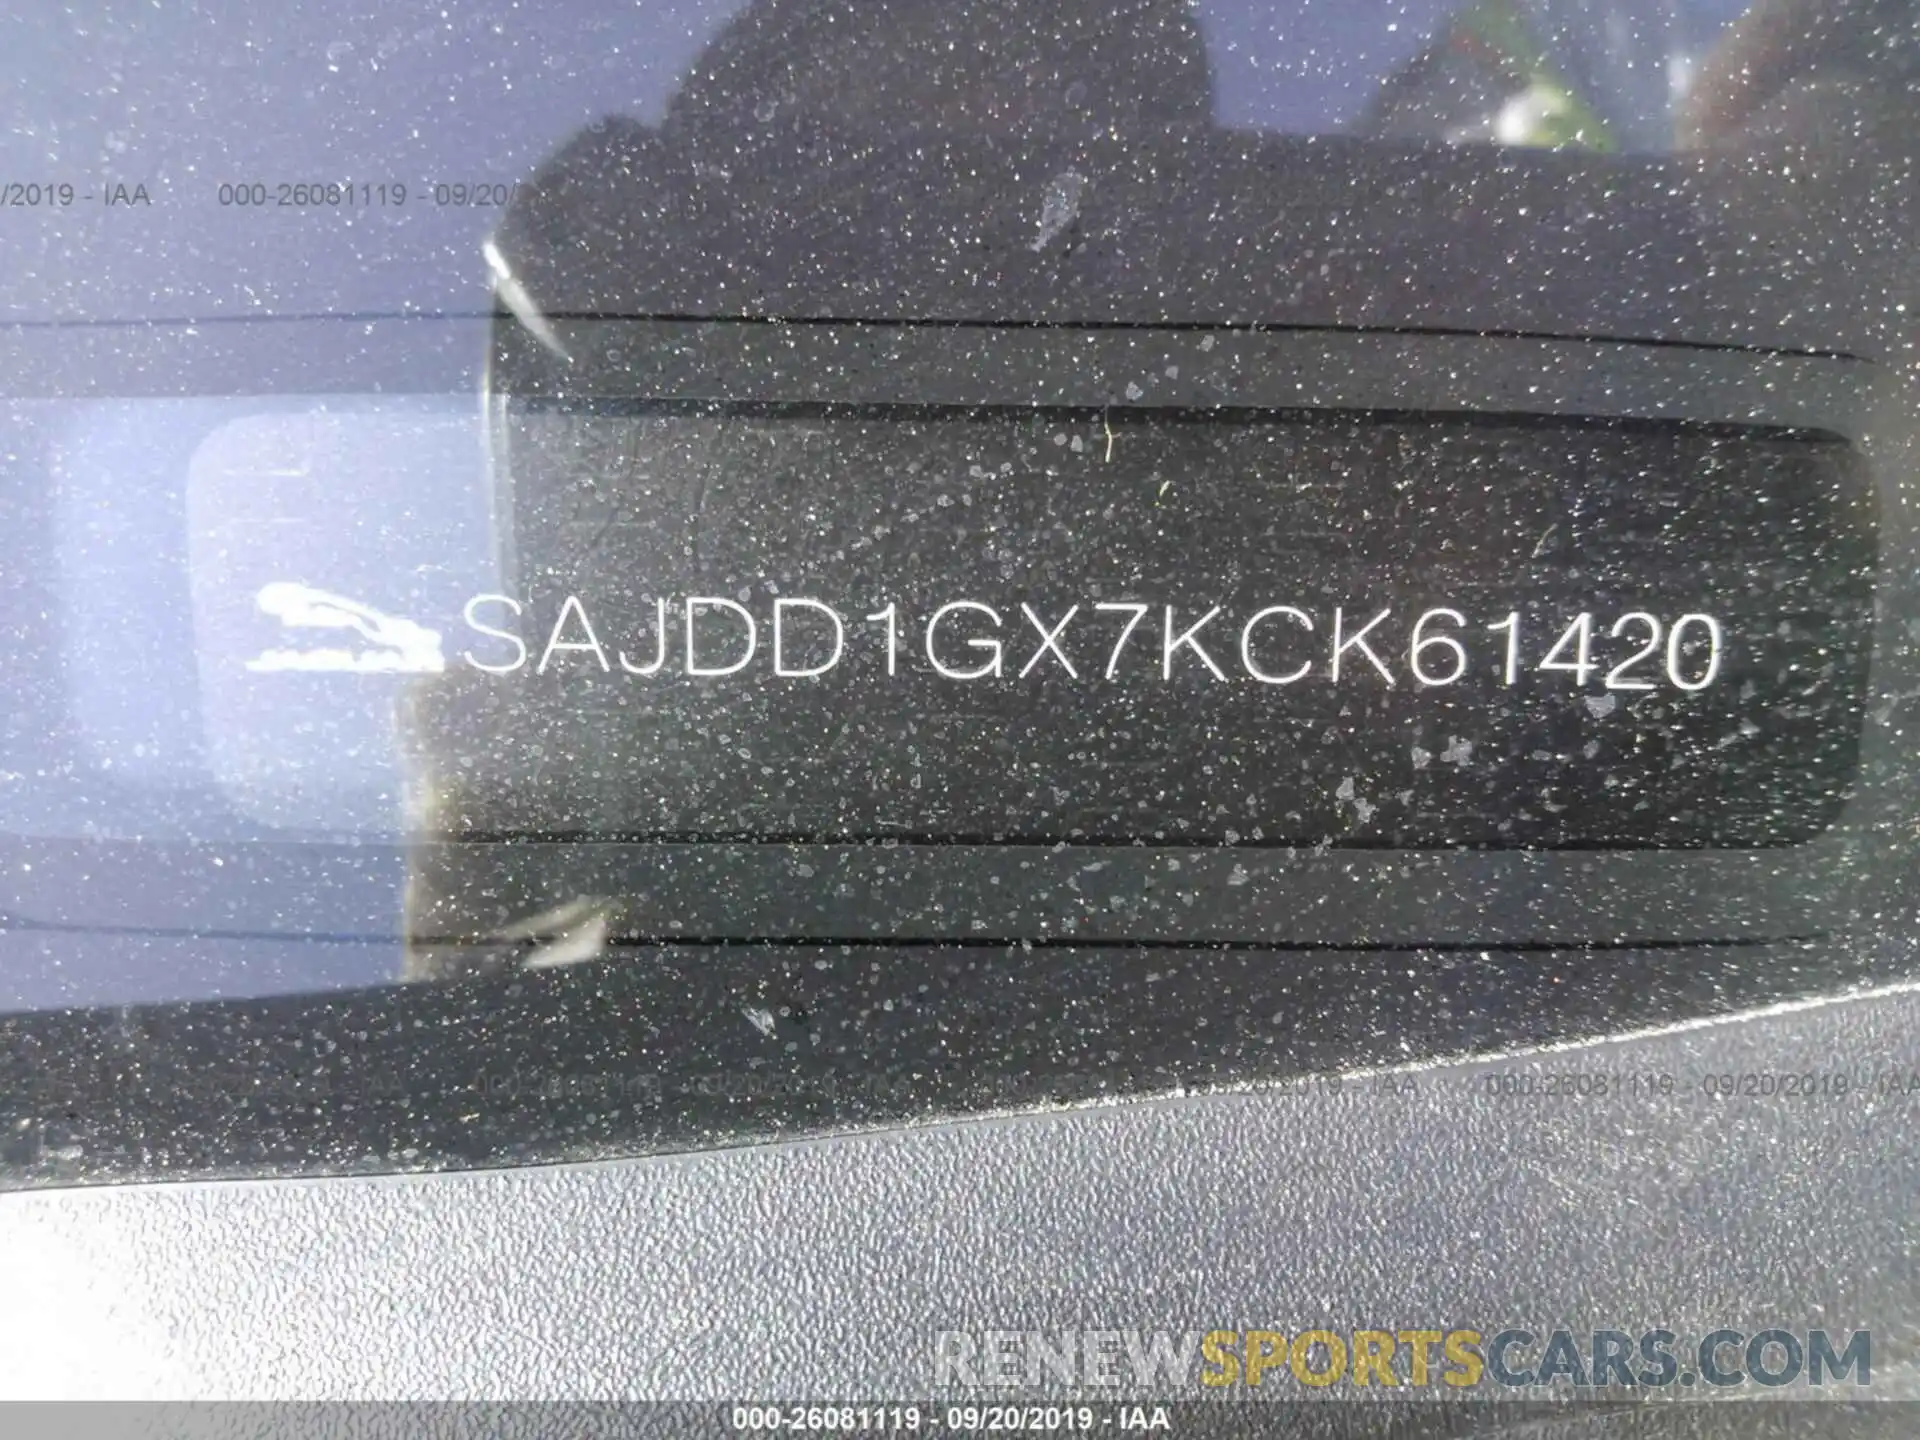 9 Photograph of a damaged car SAJDD1GX7KCK61420 JAGUAR F-TYPE 2019